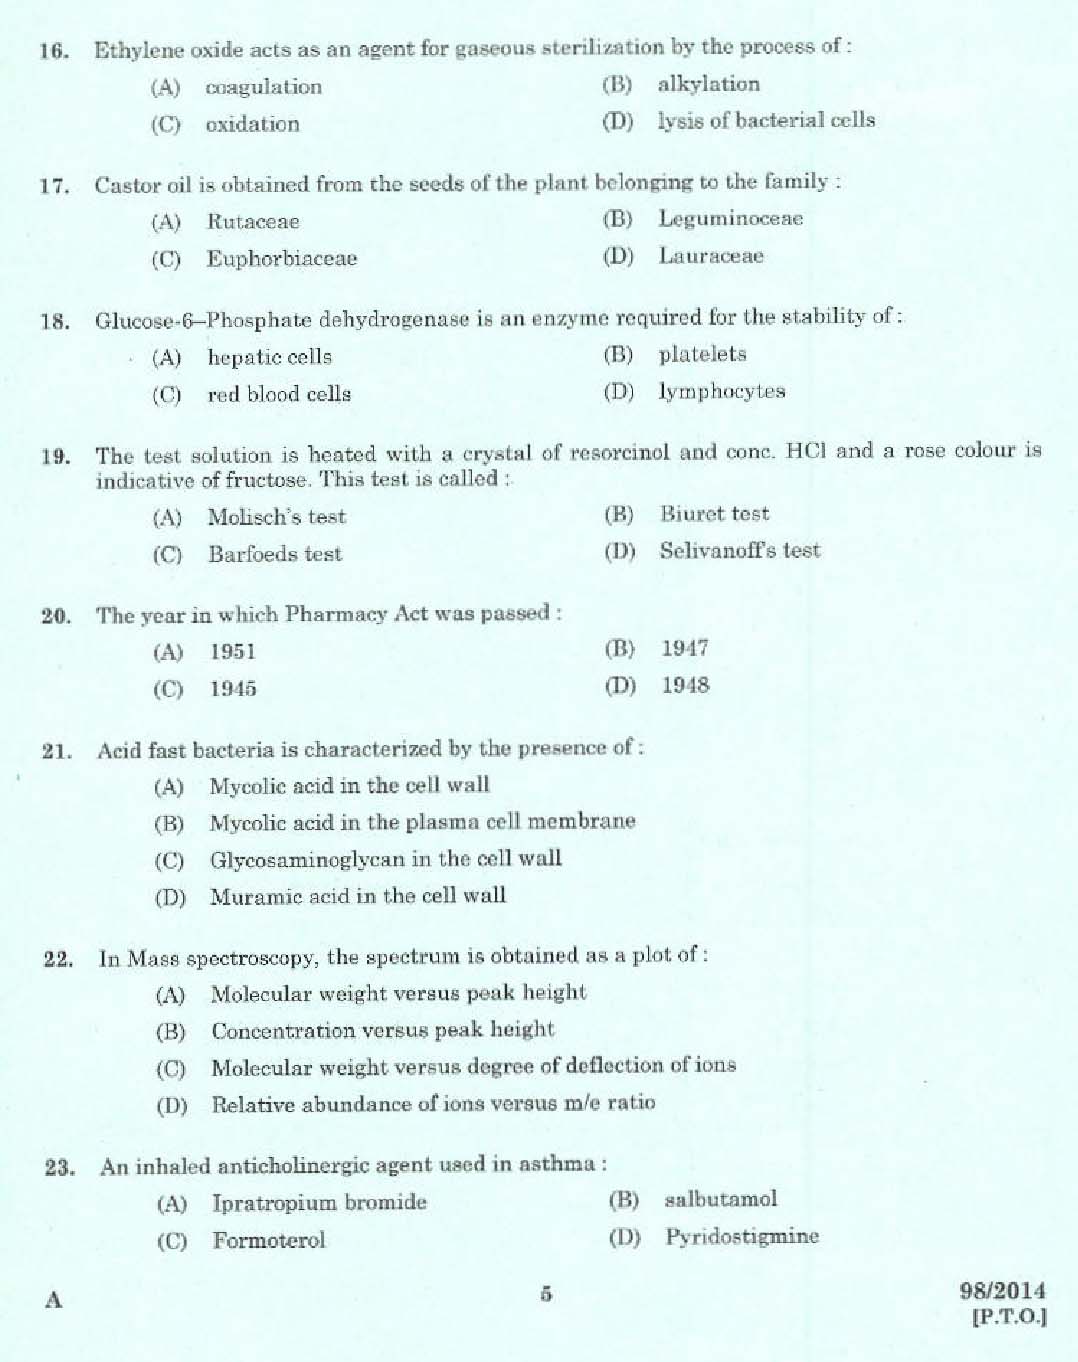 Kerala PSC Pharma Chemist Exam Code 982014 3